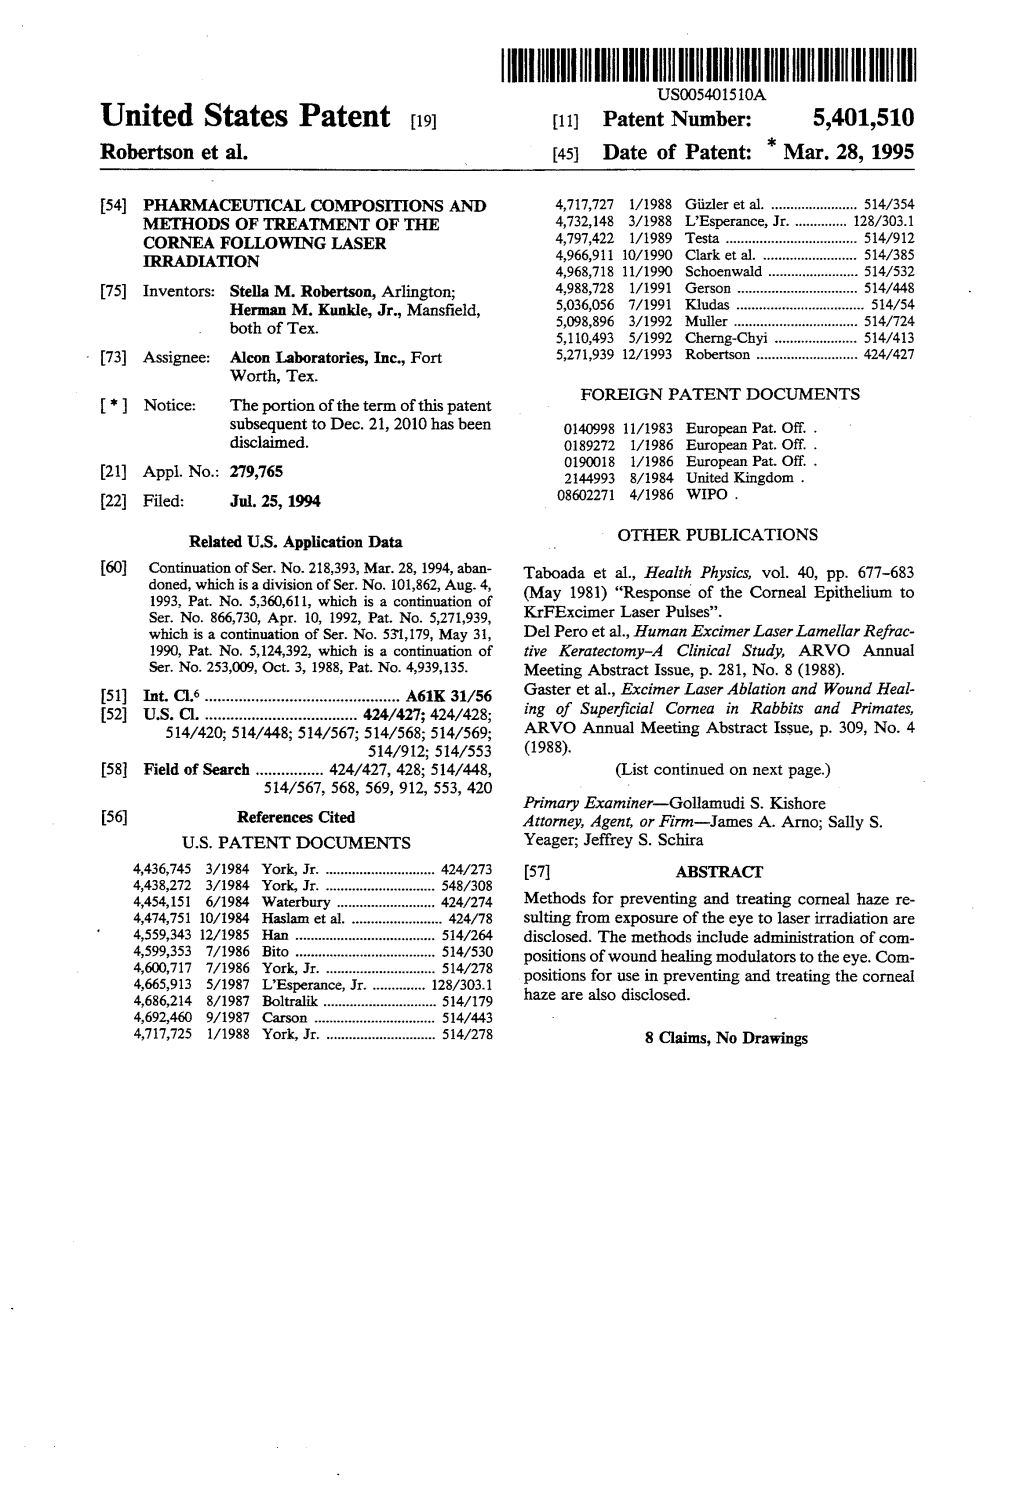 United States Patent 19 11 Patent Number: 5,401,510 Robertson Et Al